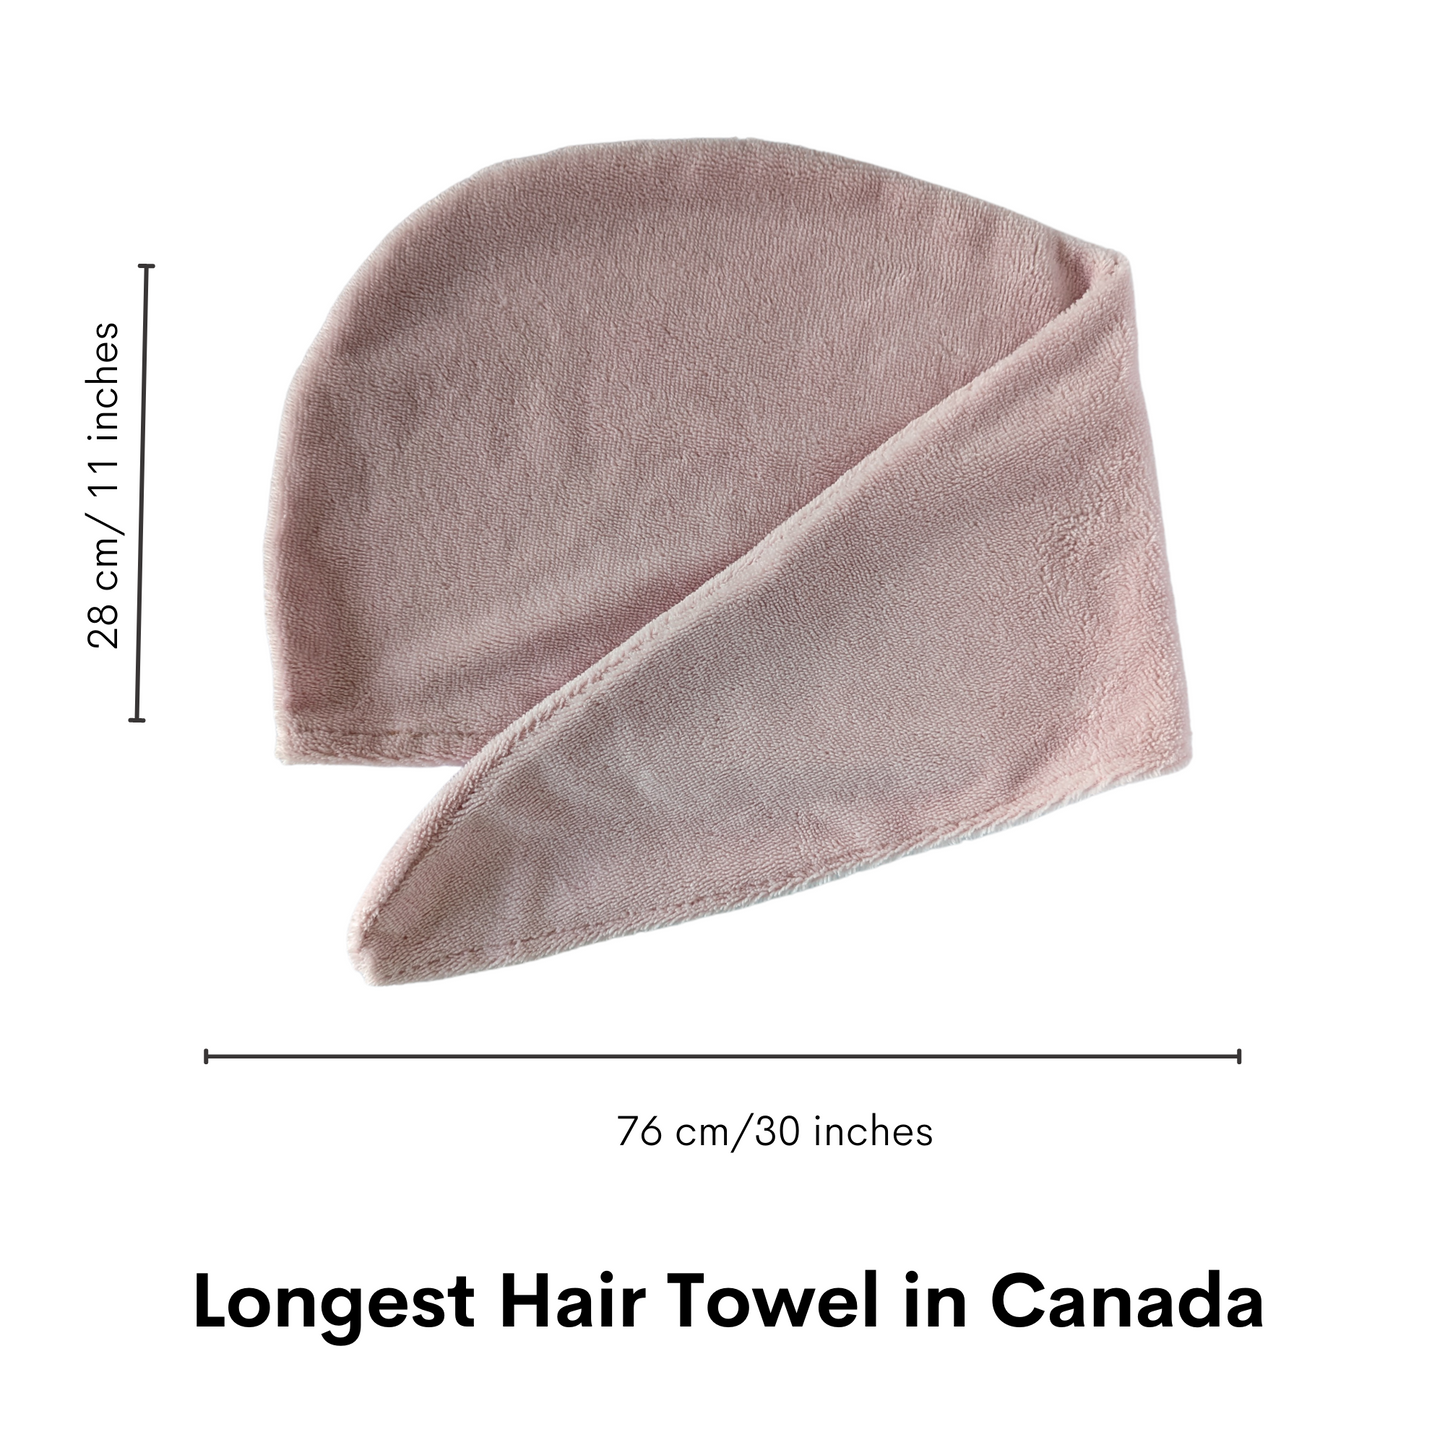 The longest hair towel in Canada Arctic Rose hair towel handmade in Canada 